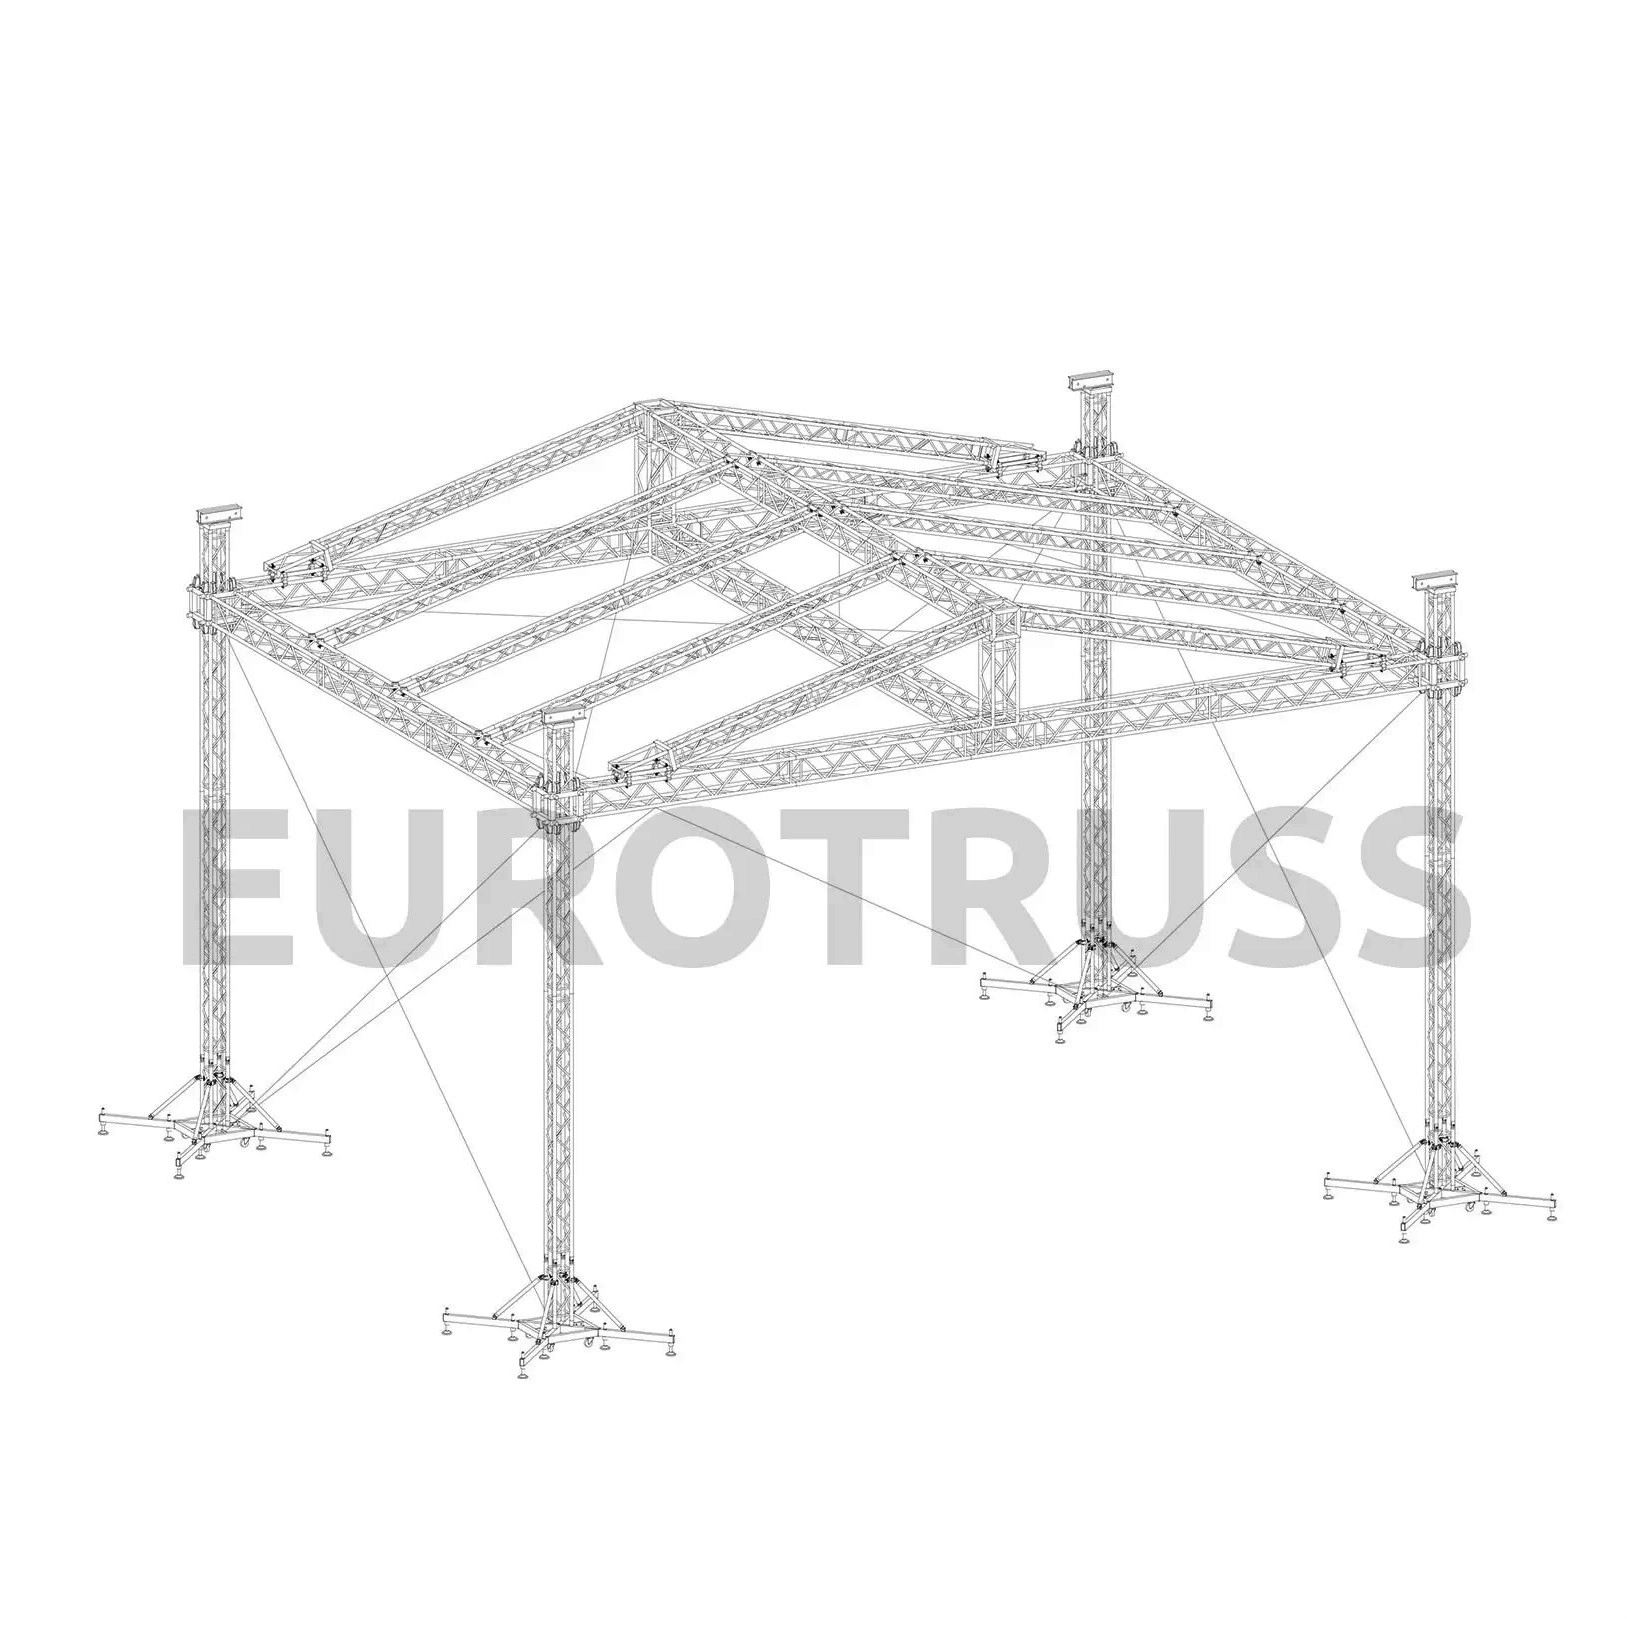 Сцена Eurotruss SR 20 - 12x10 м 